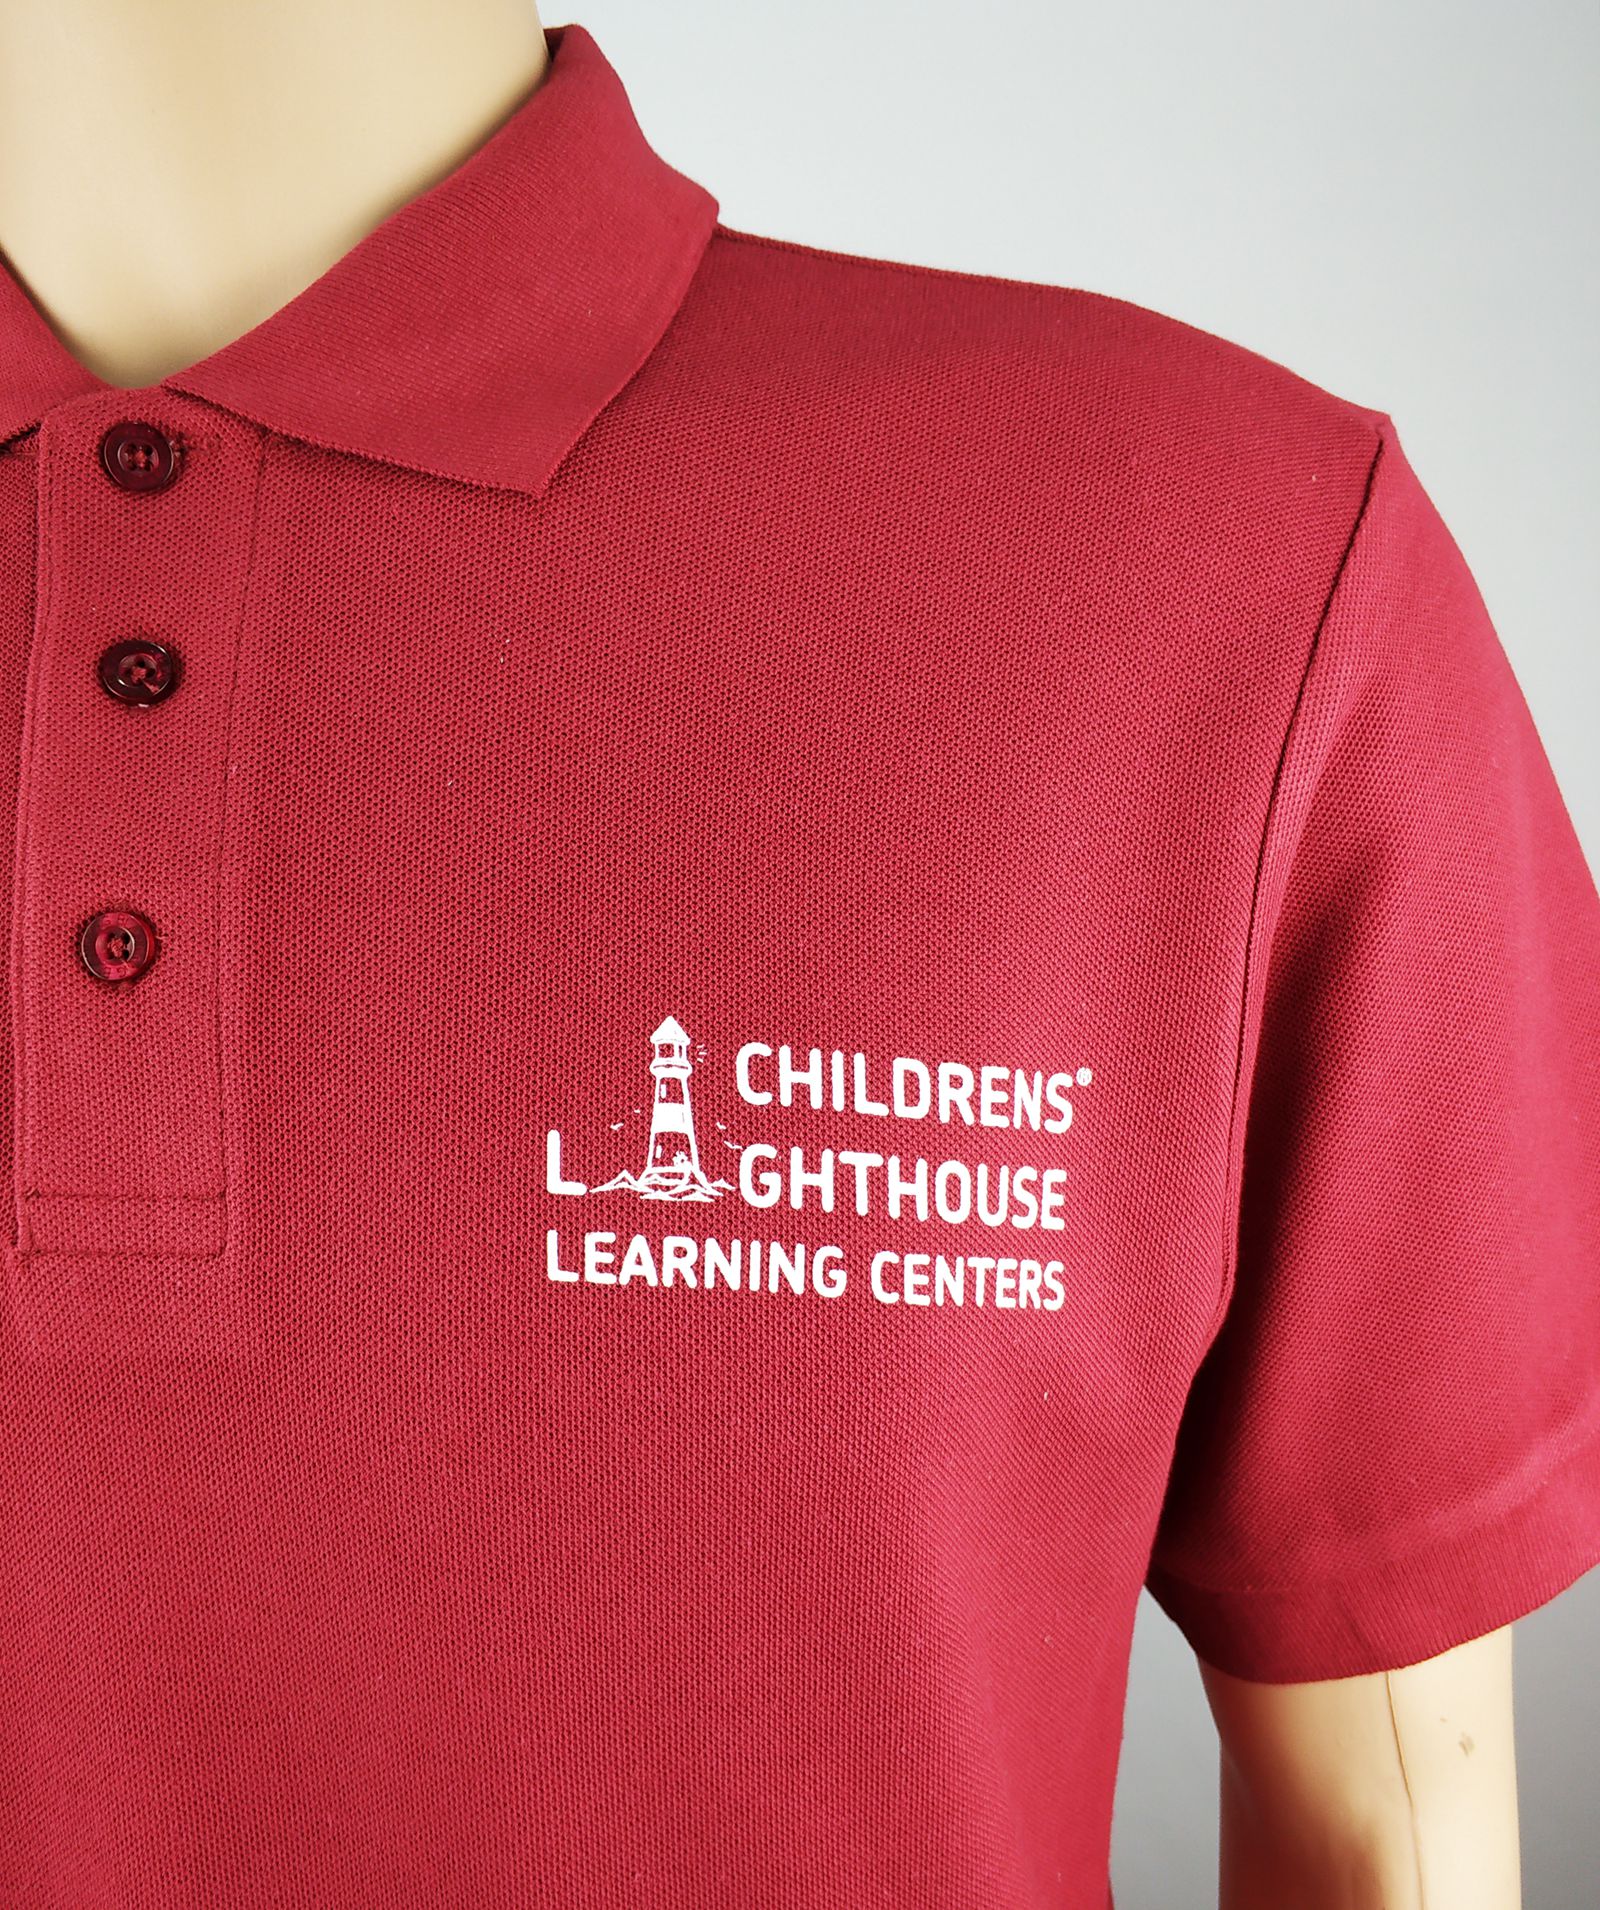 Custom printed polo shirts for educational organization 